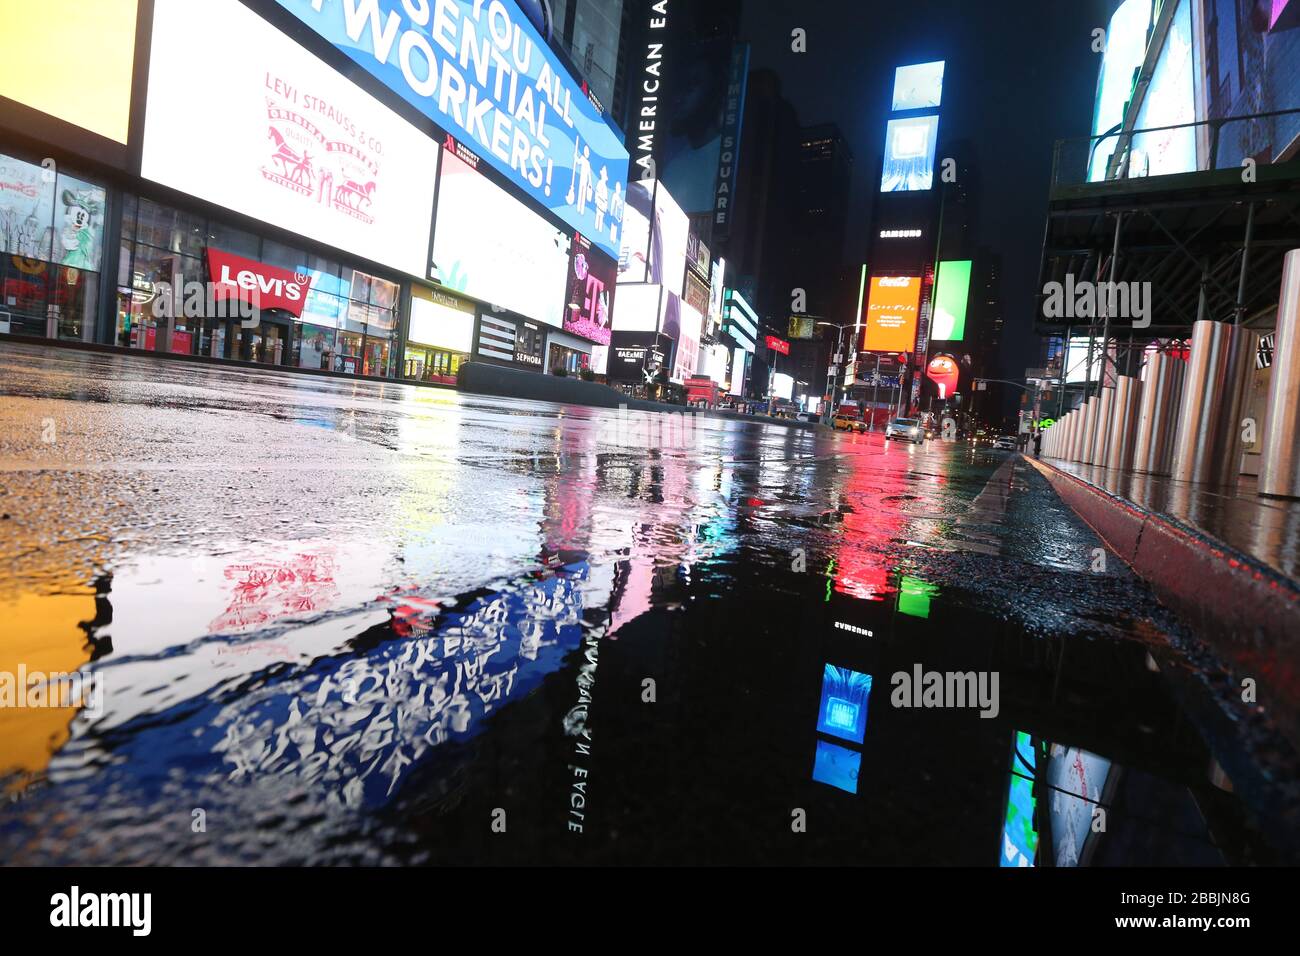 March 28, 2020, New York, NY, United States: An empty Times Square on a rainy night during the COVID-19 or novel coronavirus crisis. (Credit Image: © Dan HerrickZUMA Wire) Stock Photo